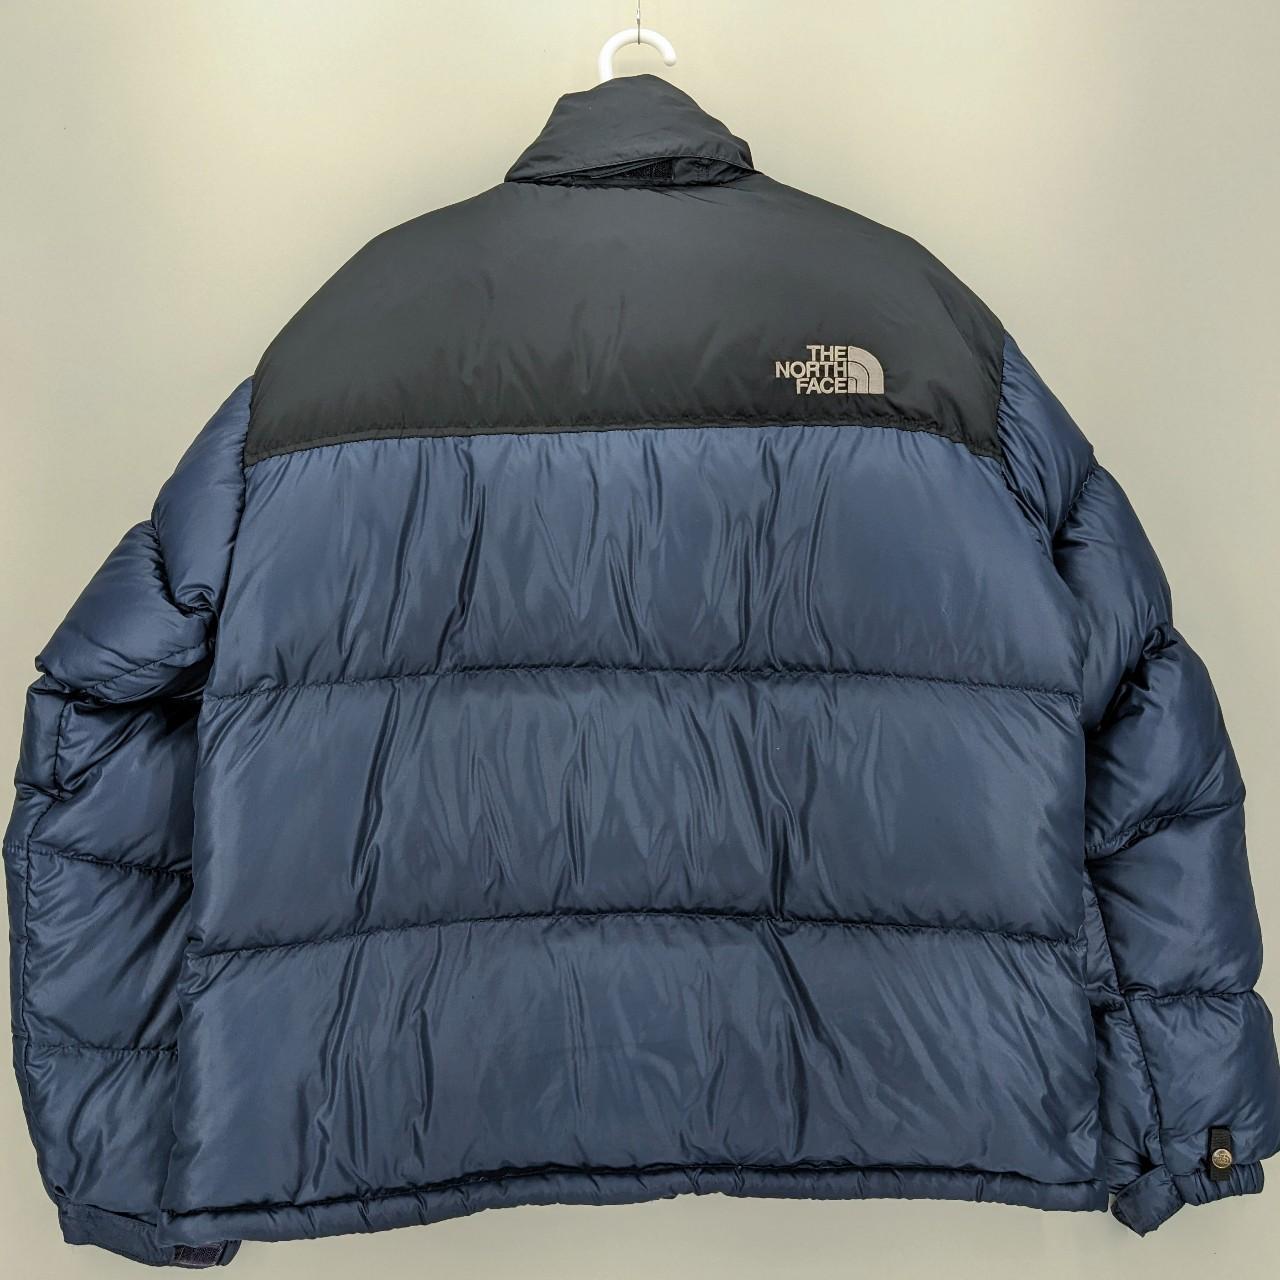 The North Face Vintage Nuptse 800 Puffer Jacket,... - Depop